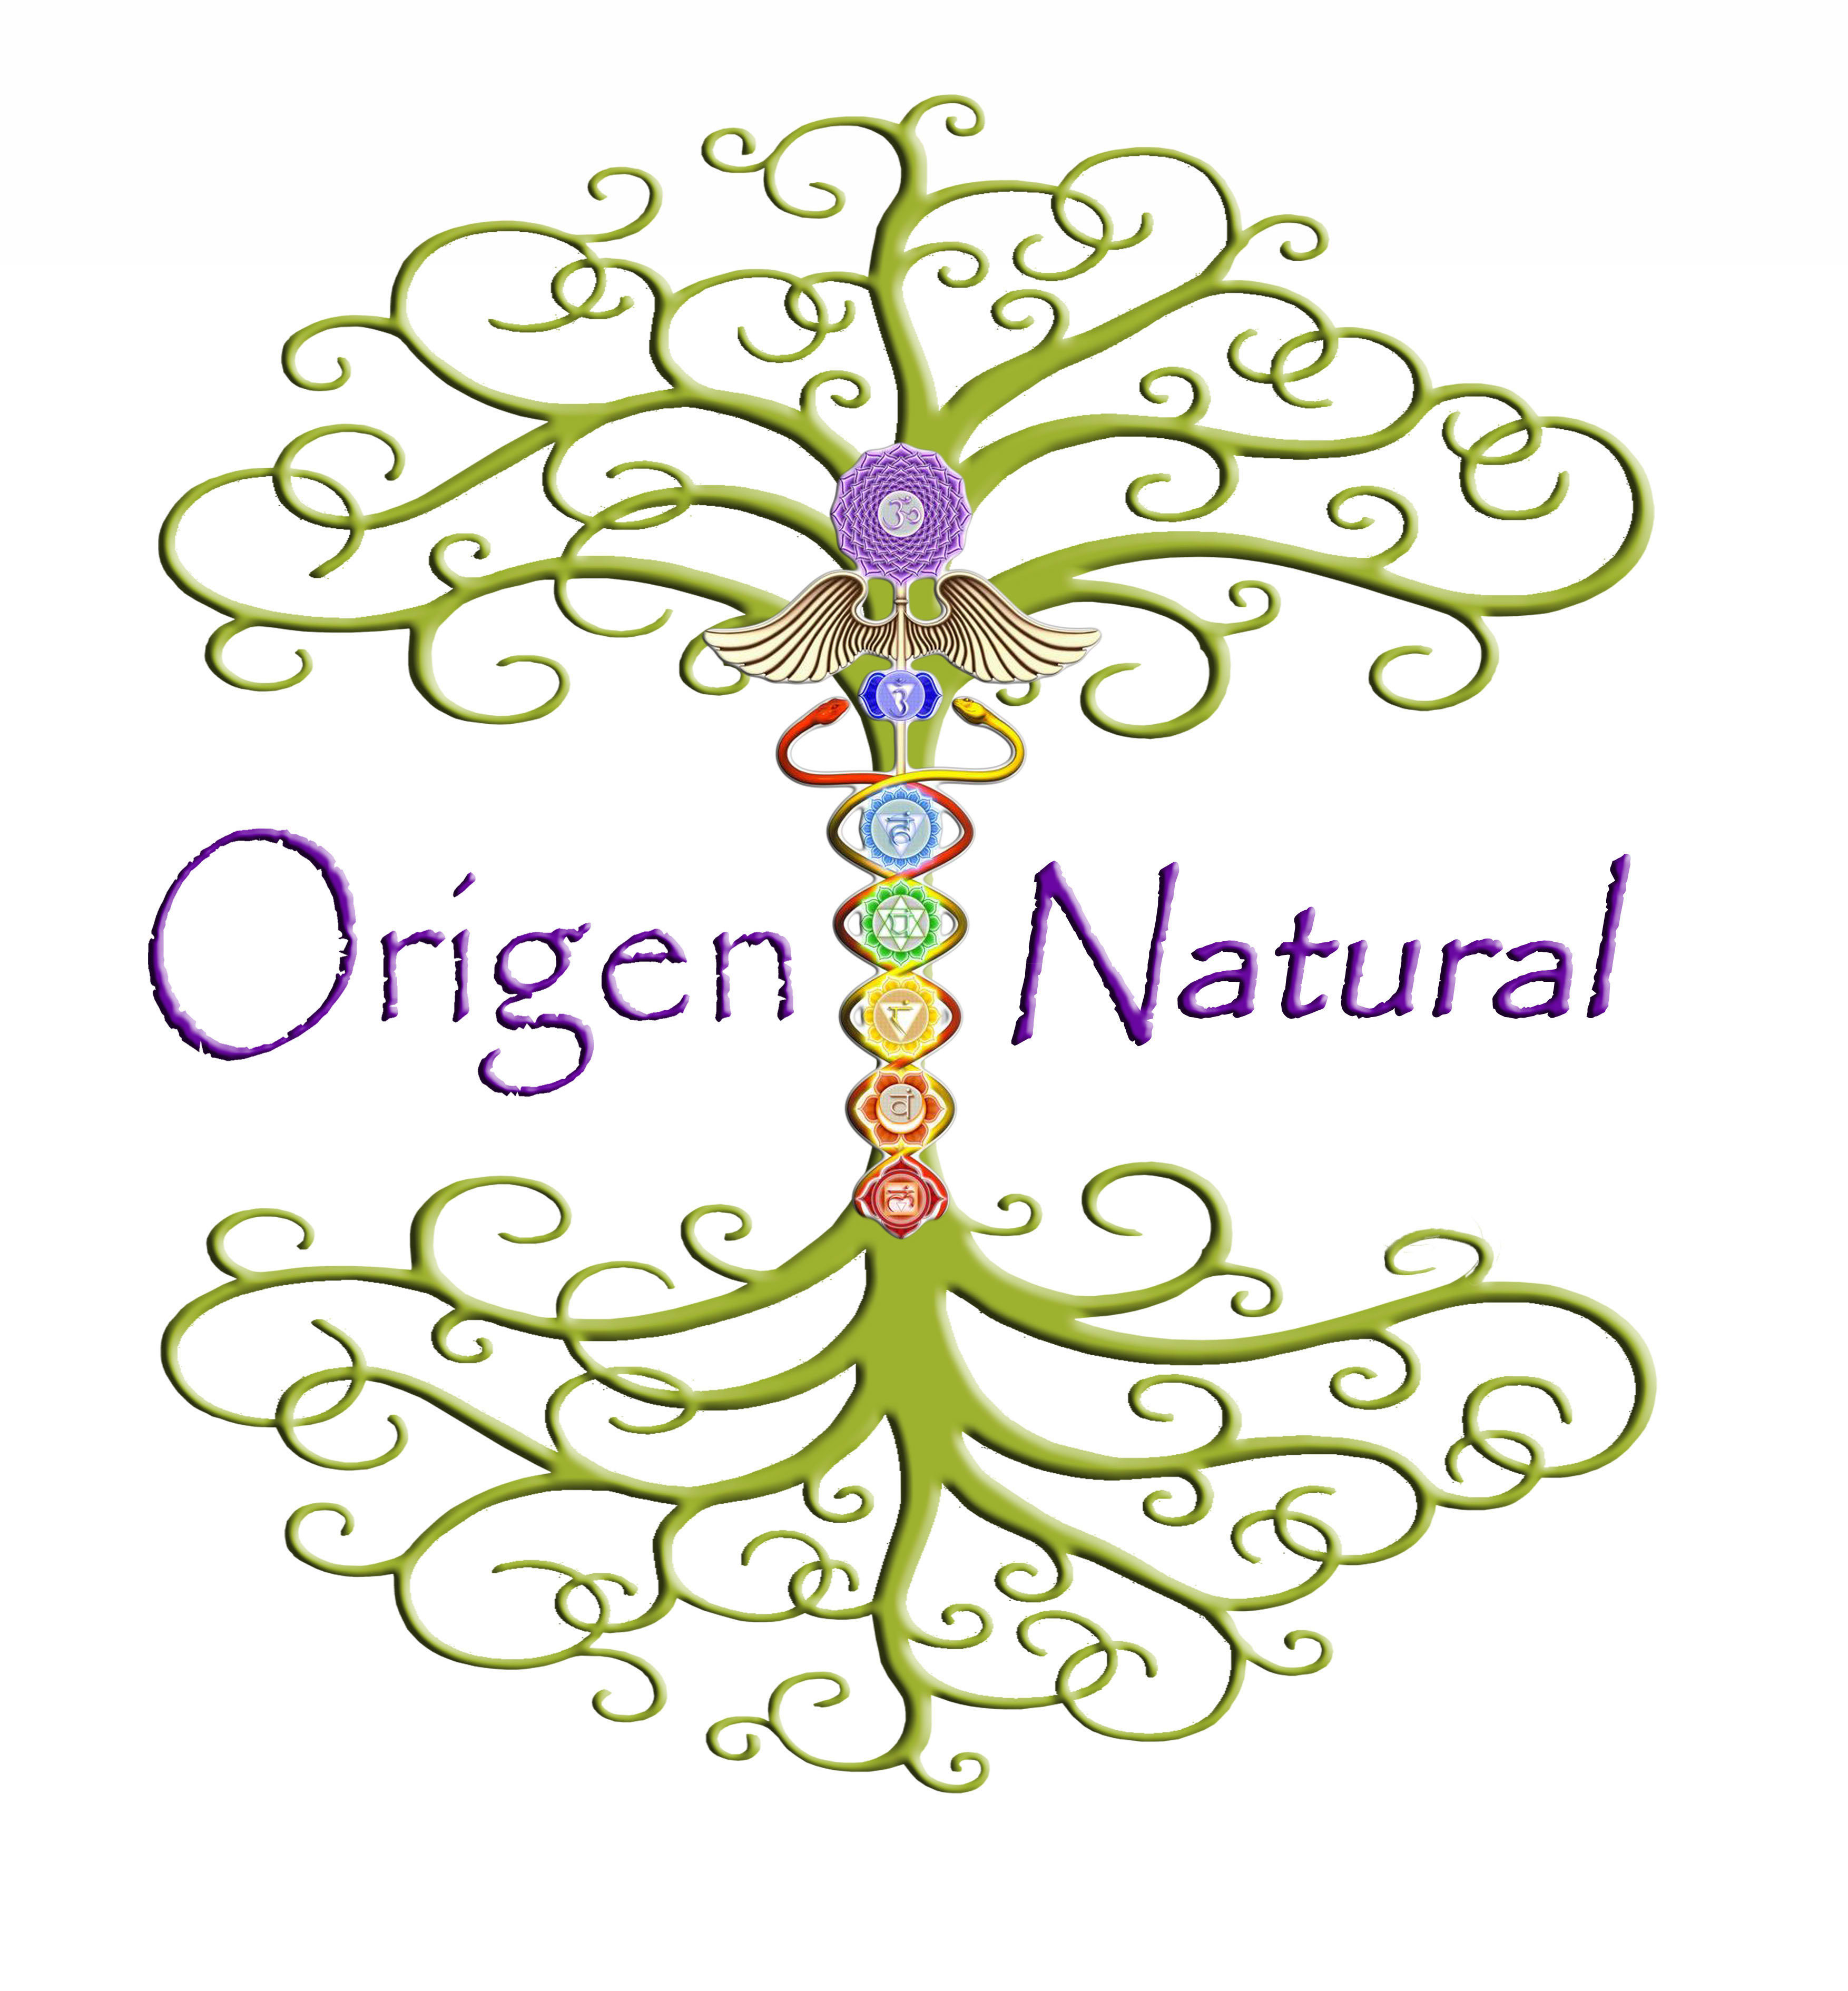 Origen Natural